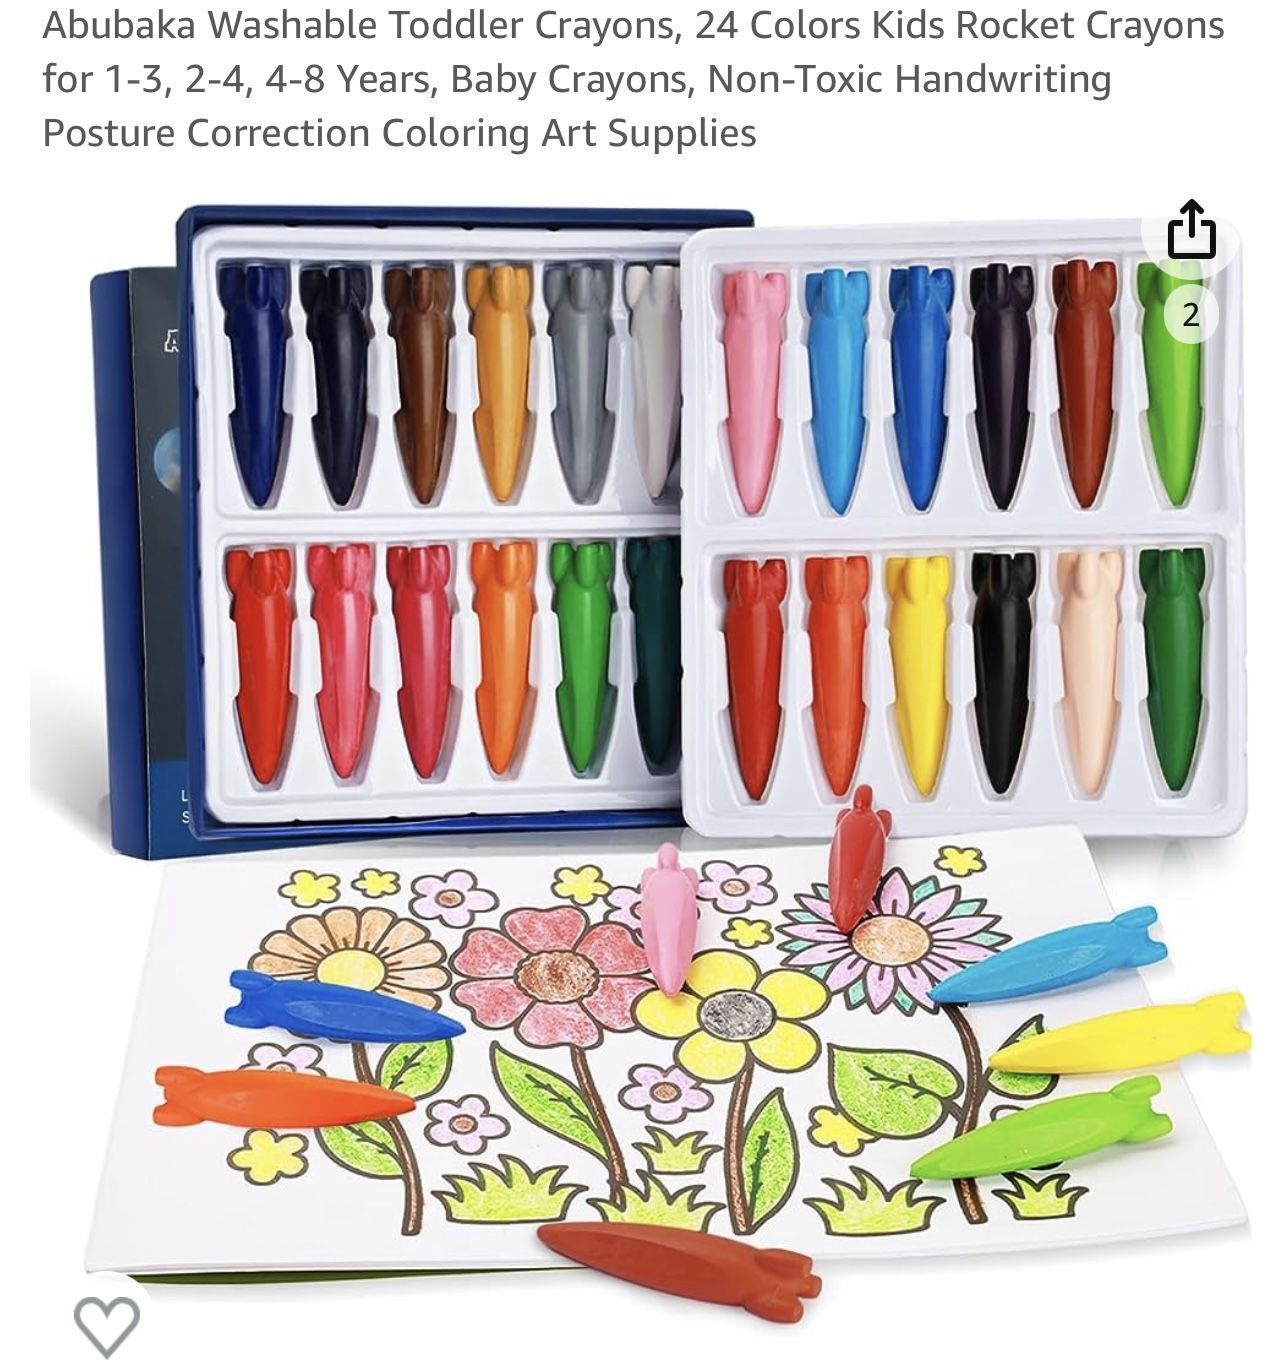 Abubaka Washable Toddler Crayons, 24 Colors Kids Rocket Crayons for 1-3, 2-4, 4-8 Years, Baby Crayons, Non-Toxic Handwriting Posture Correction Colori